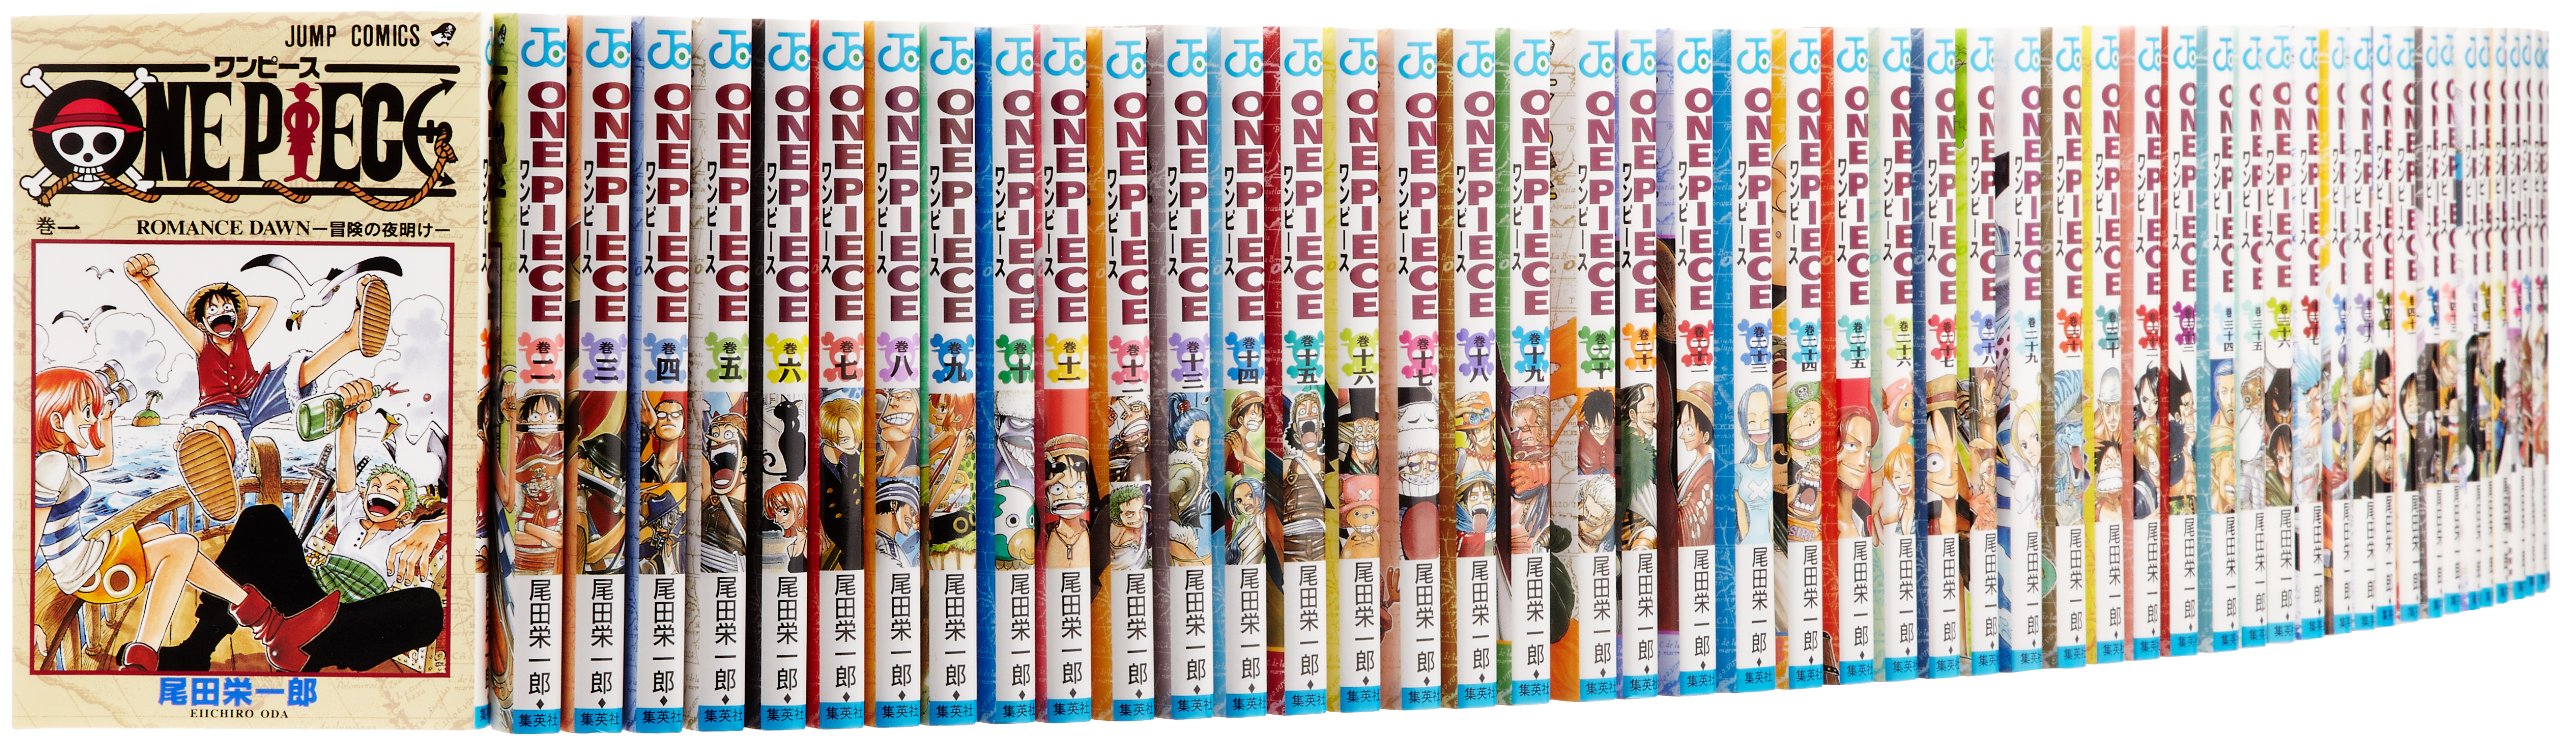 ONE PIECE comics 1-78 volume set ( Jump comics )